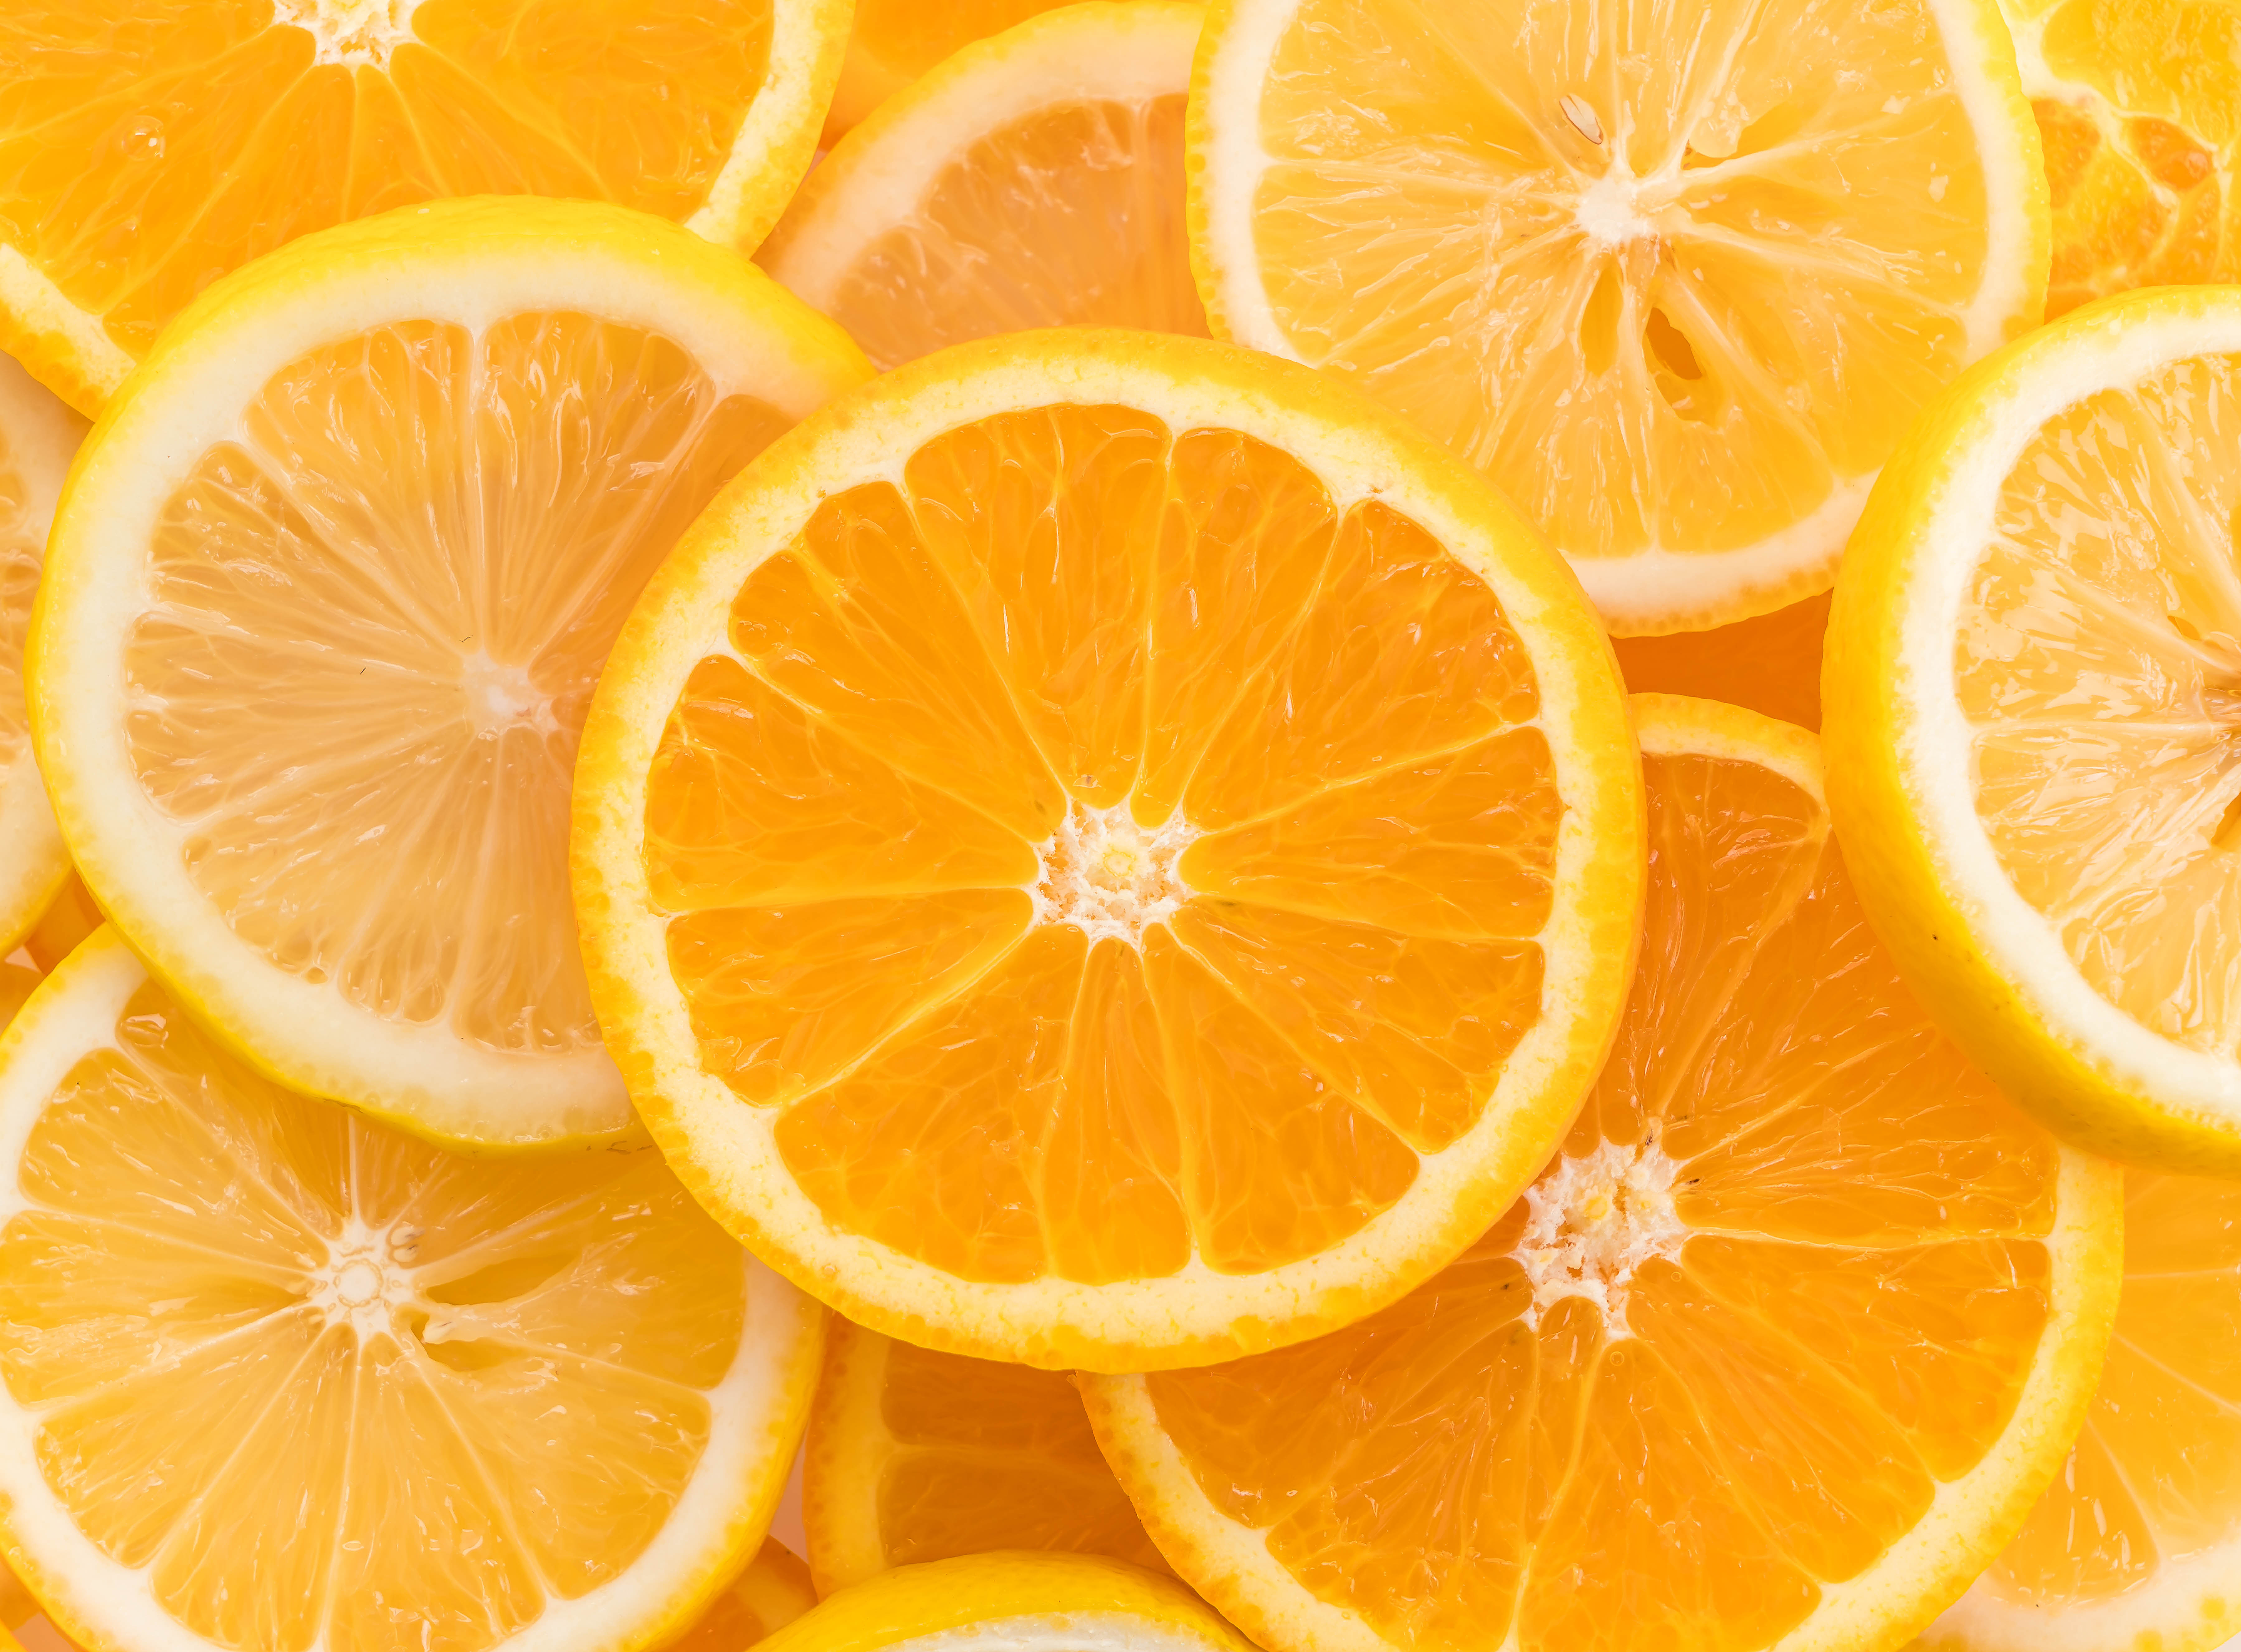 lime, lemon and orange slices